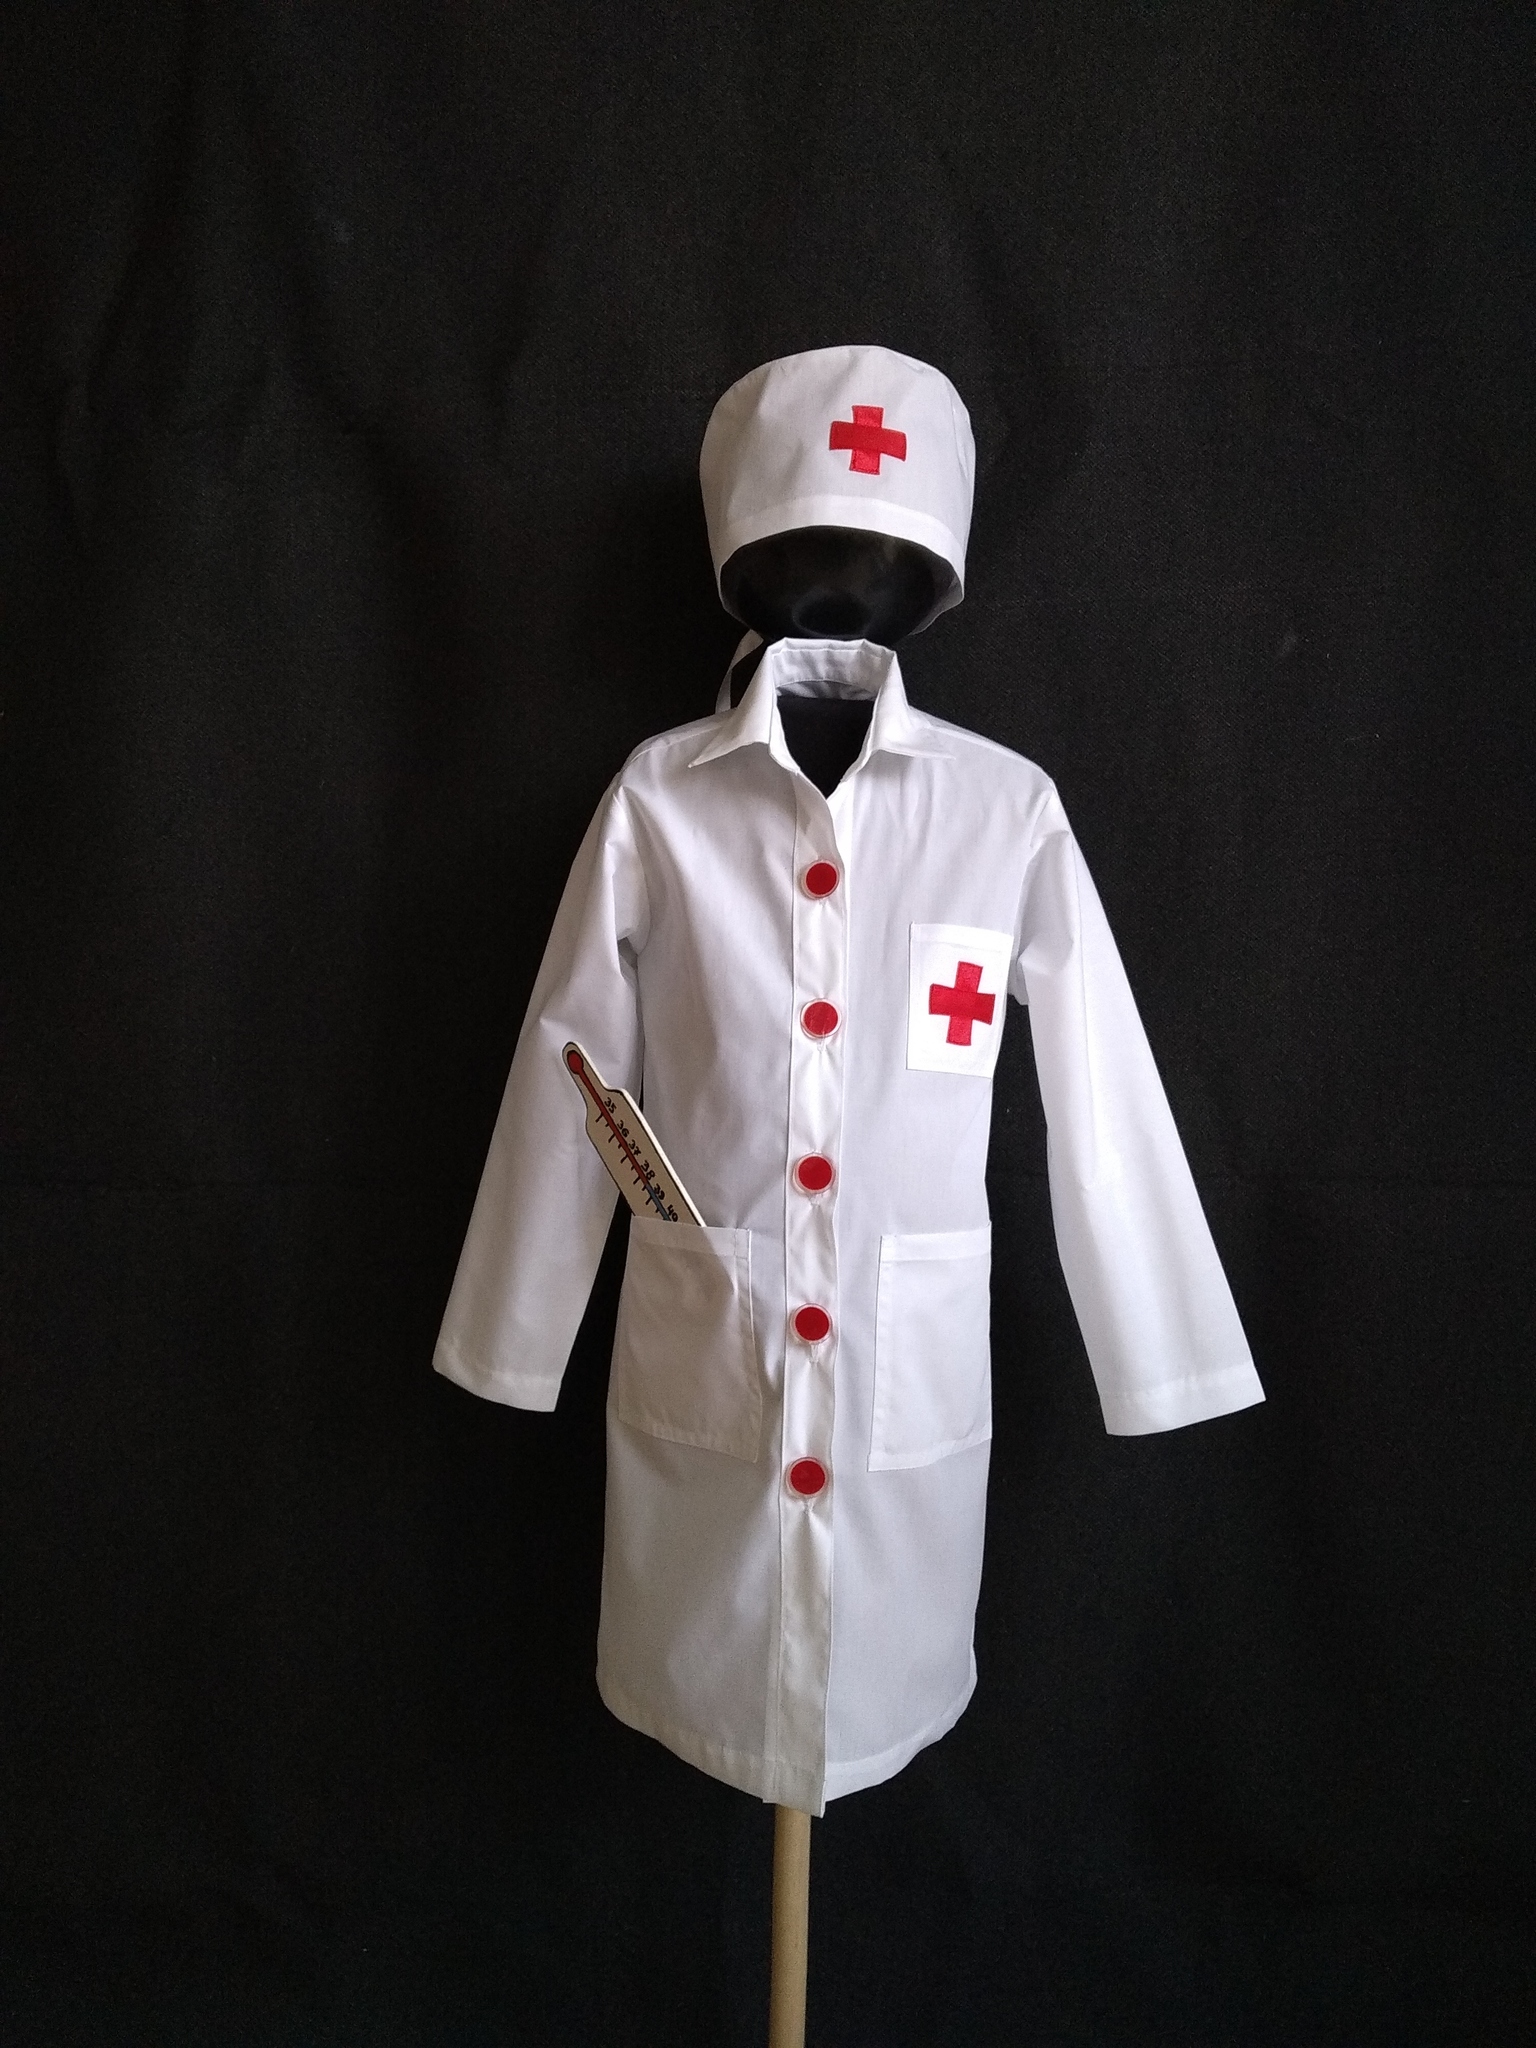 Халат и колпак. Костюм врача. Костюм доктора Айболита. Детский костюм доктора. Одежда врача для детей.